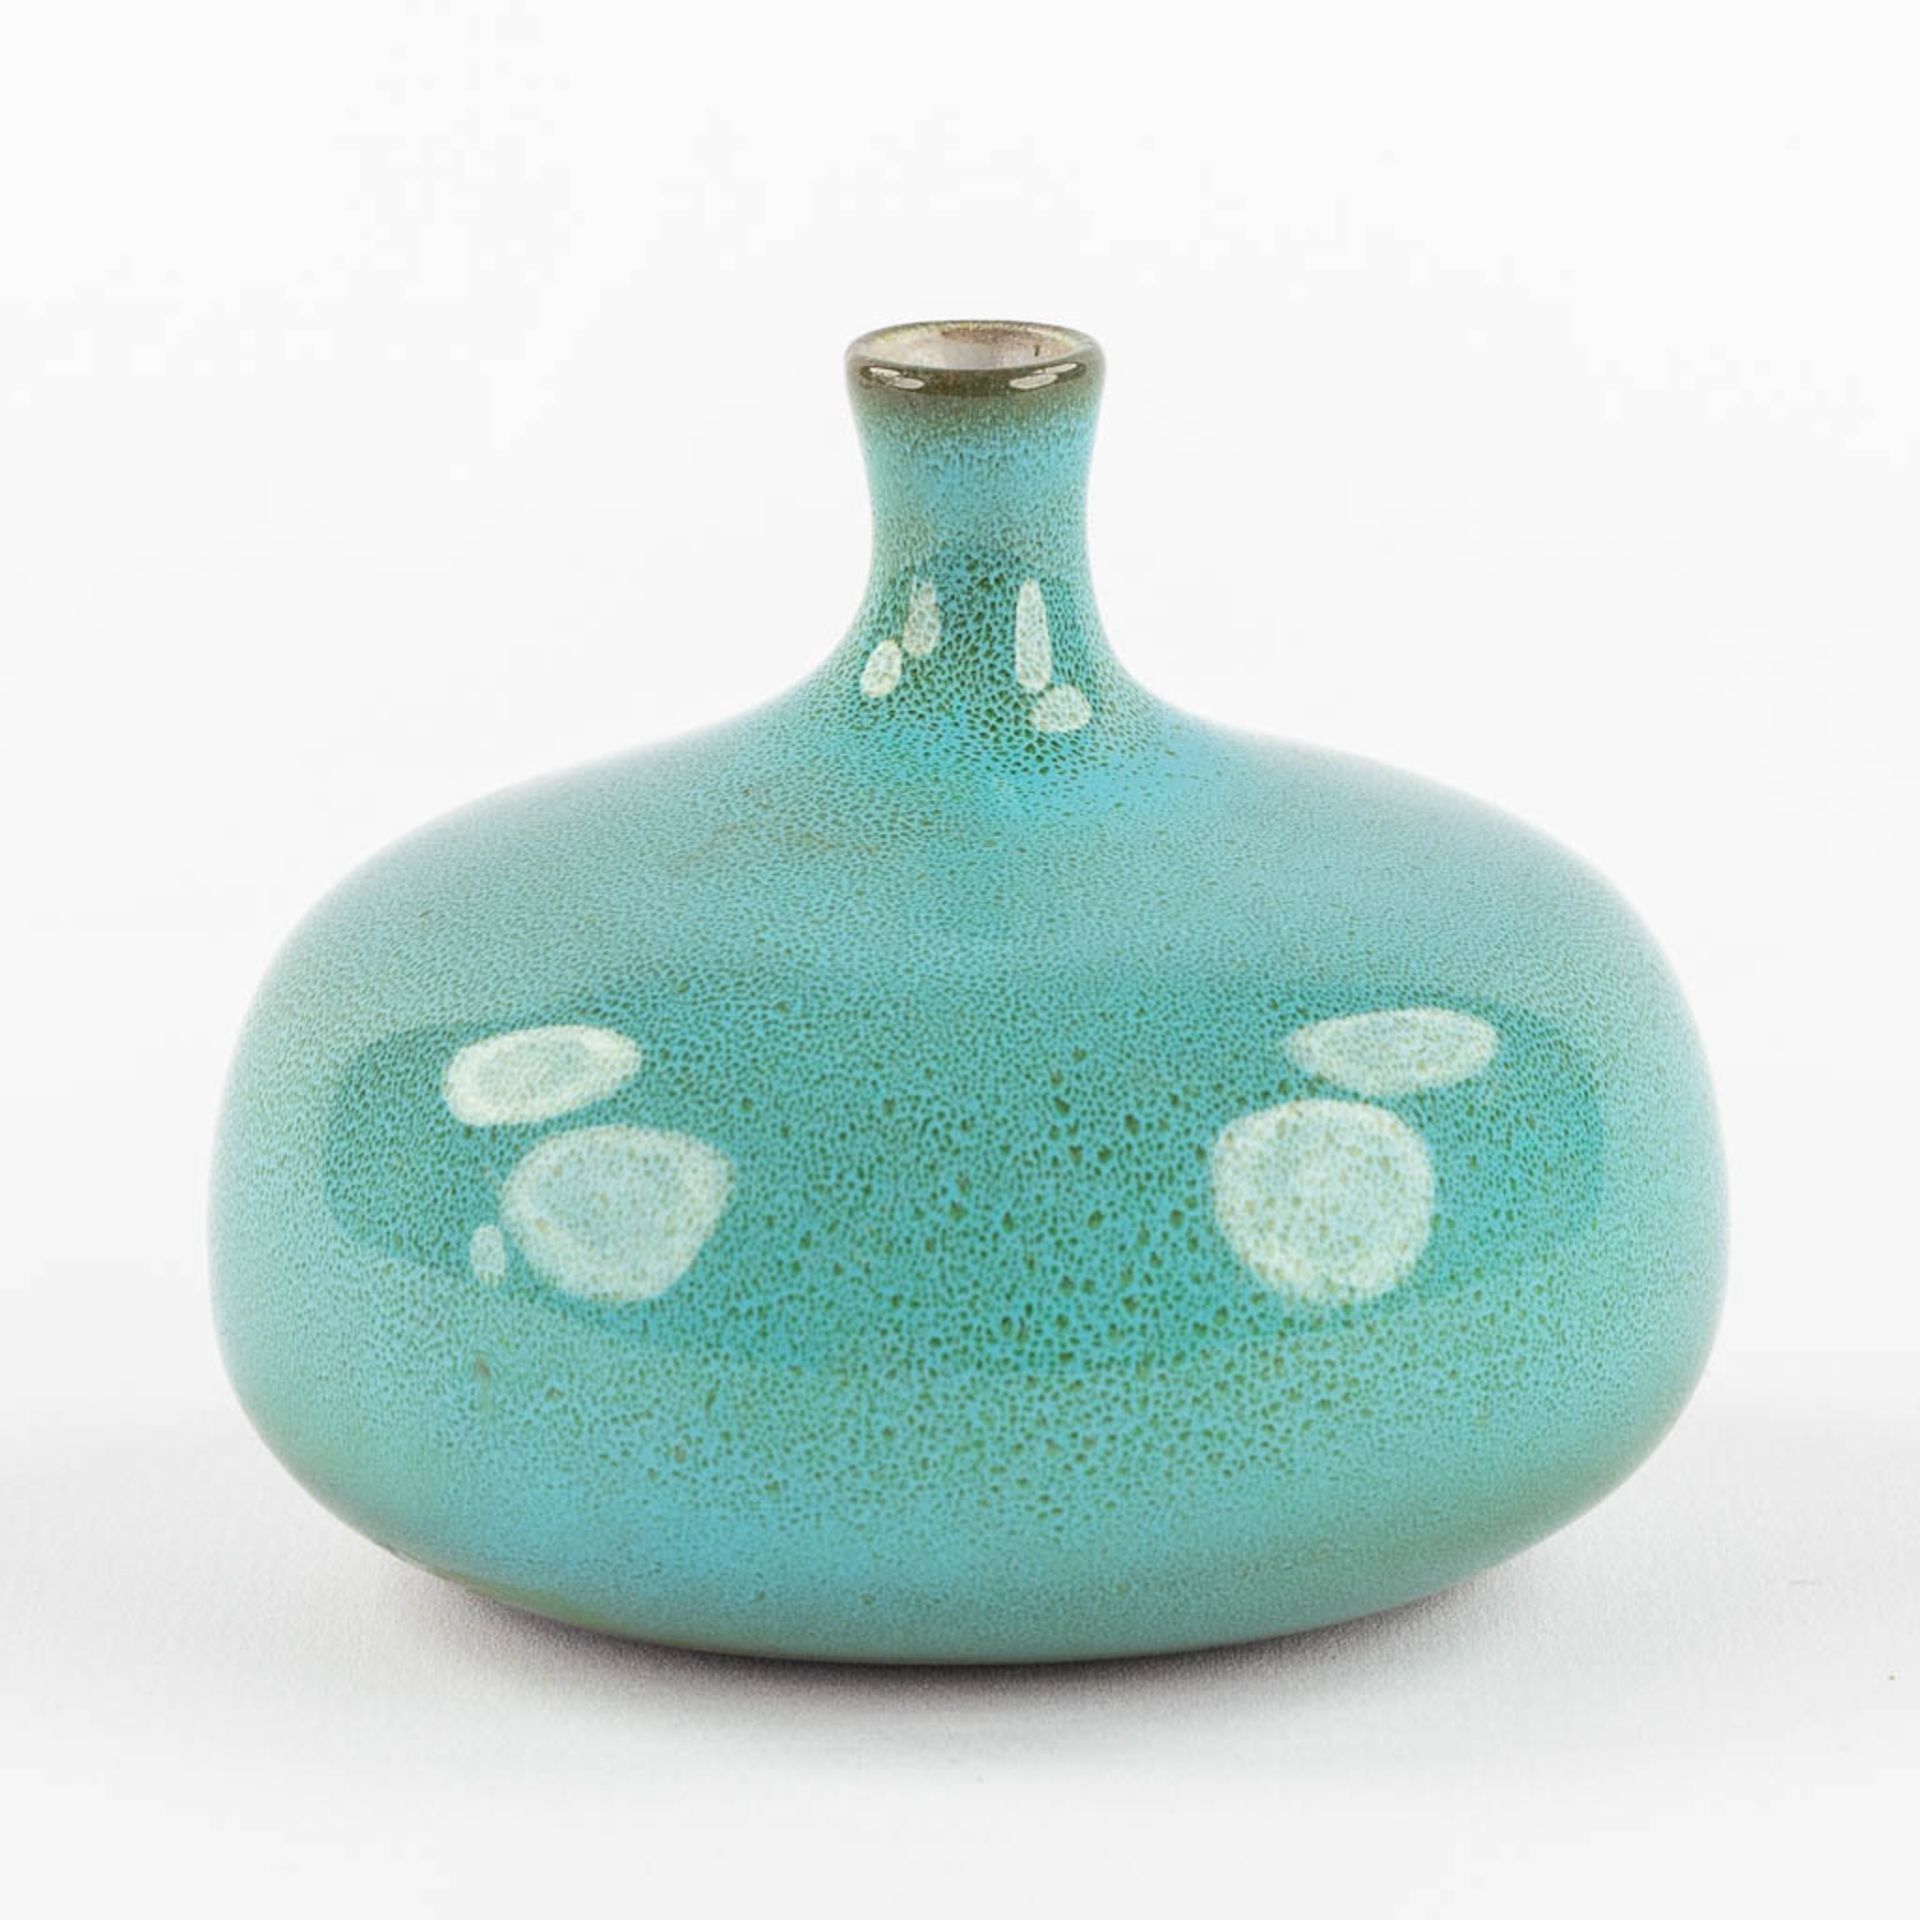 Jacques &amp; Dani RUELLAND (XX-XXI) 'Vase' glazed ceramics. (H:8 x D:10 cm) - Image 3 of 10